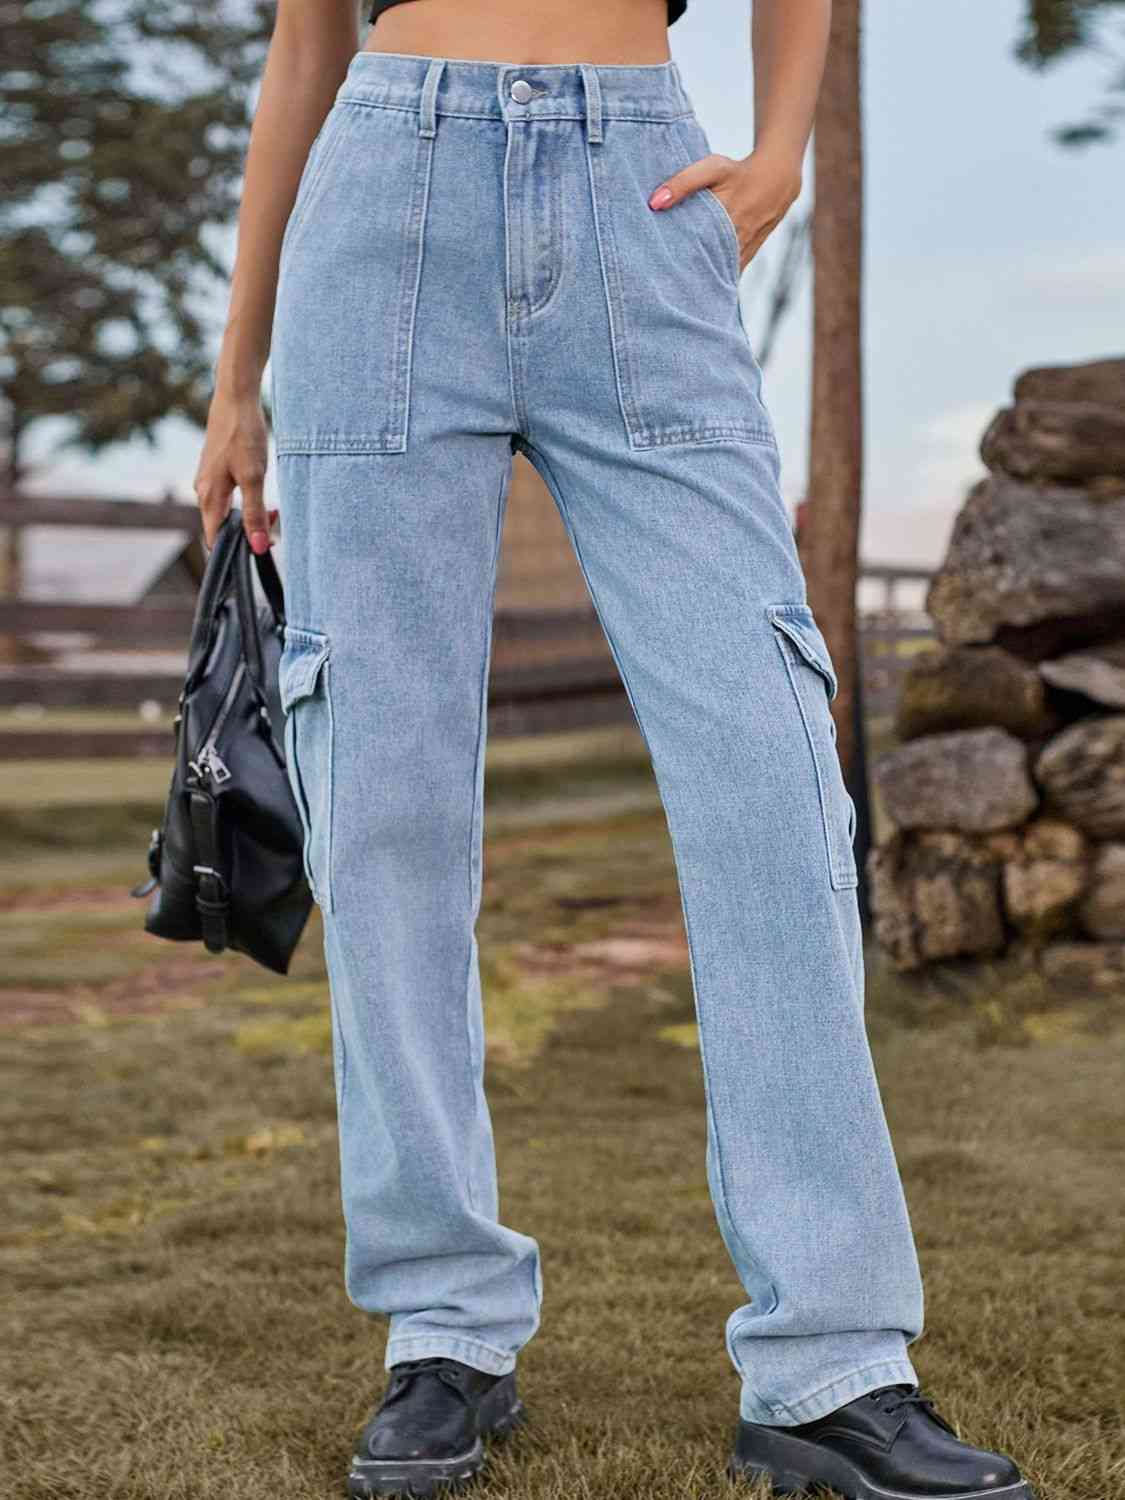 Dim Gray High Waist Cargo Jeans Sentient Beauty Fashions denim